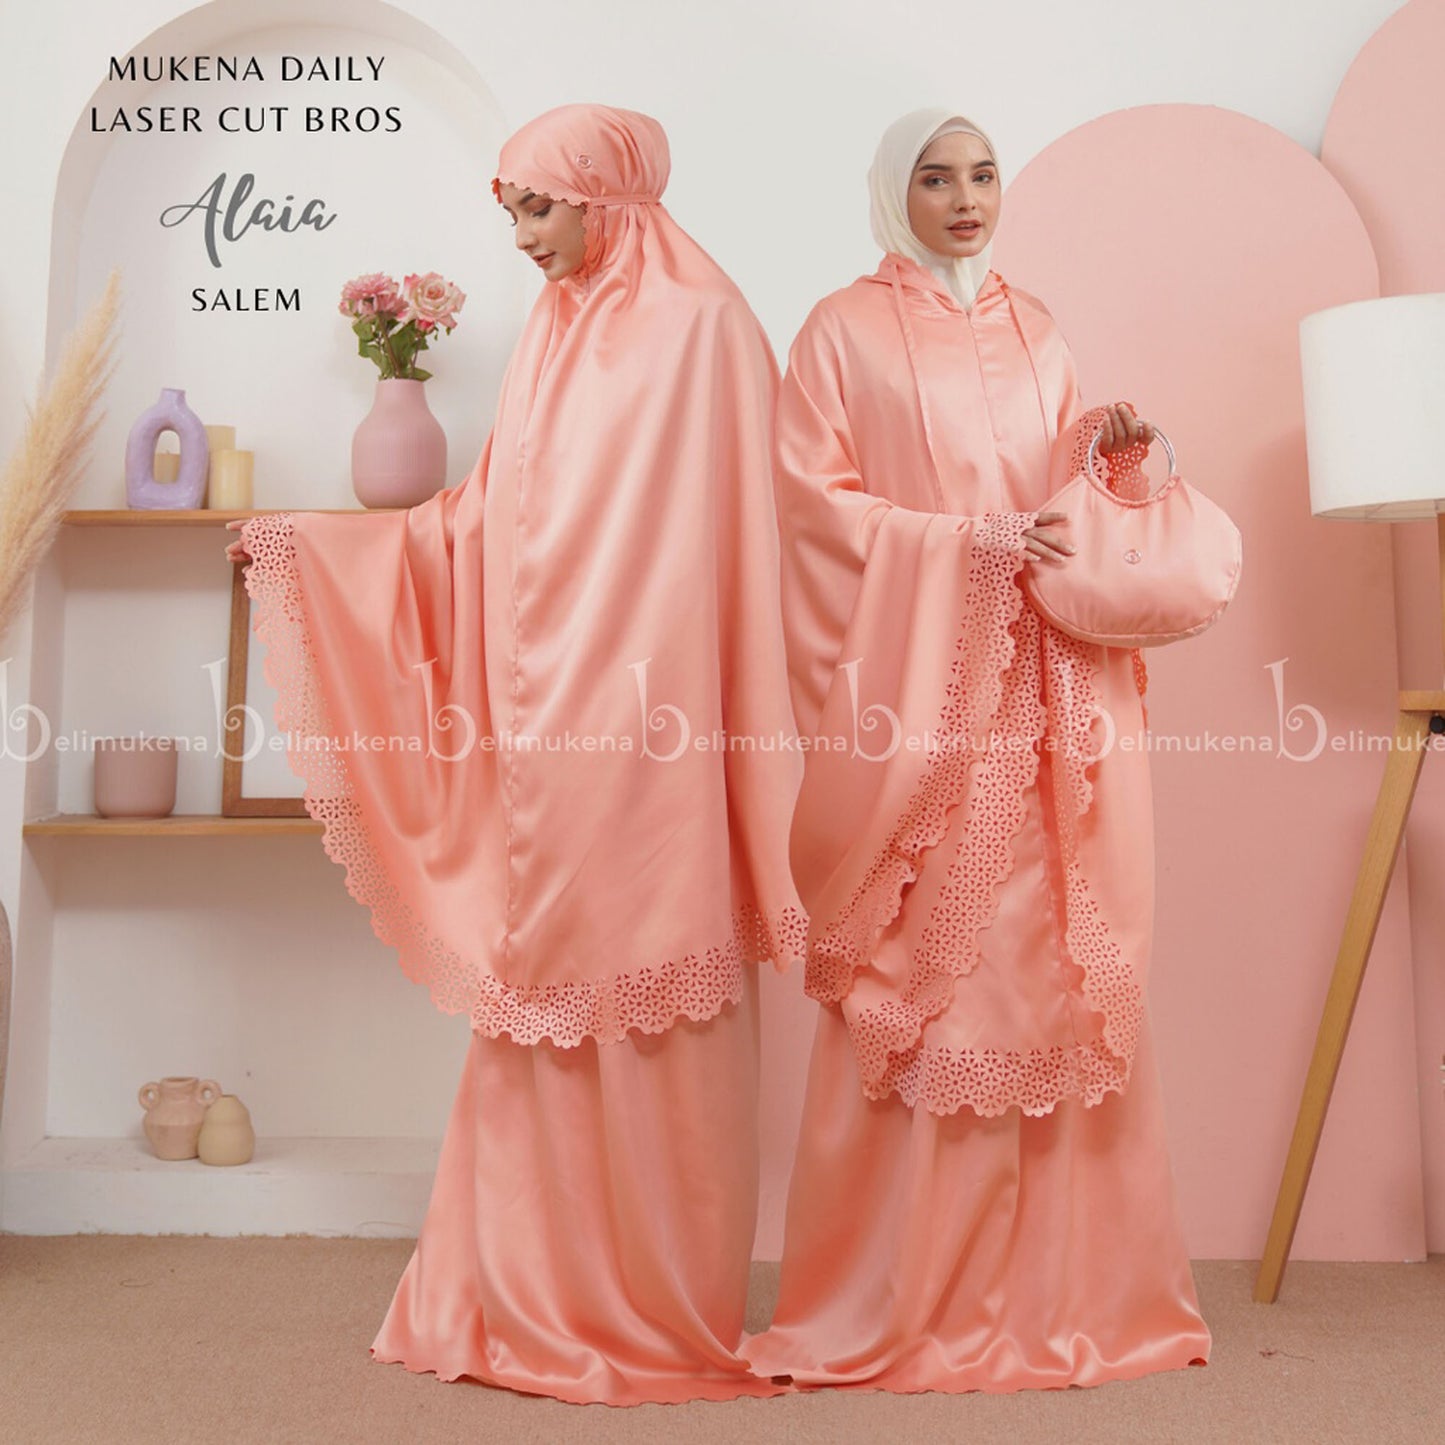 Adult Mukena Silky Daily Laser Cut Bros 2in1 Alaia Muslim Prayer Dress